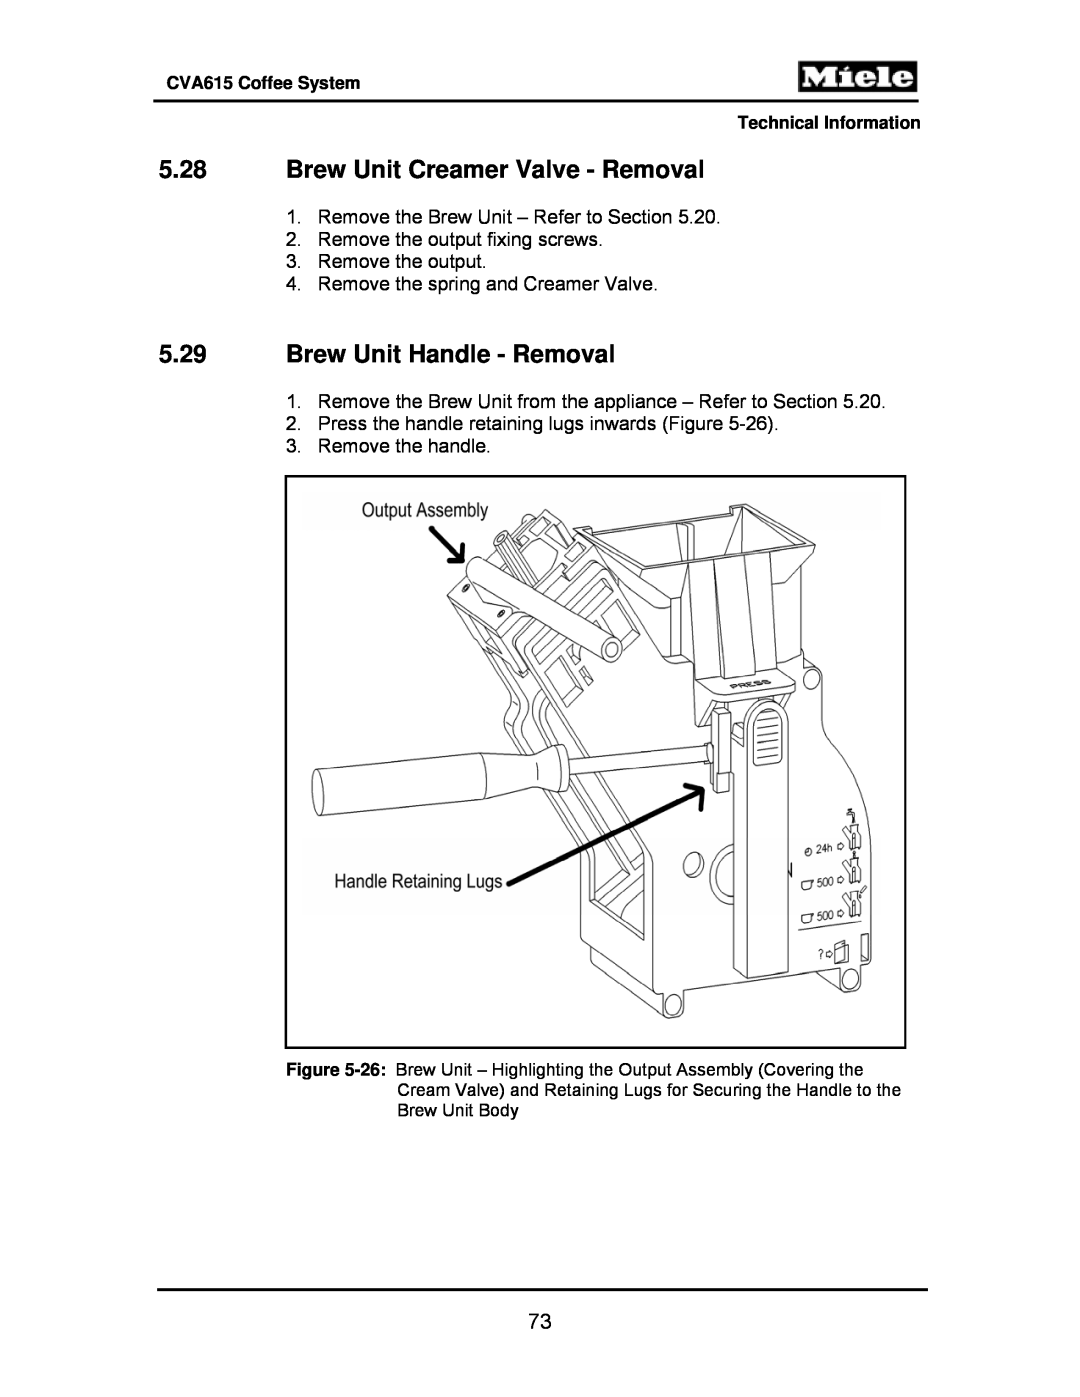 Miele CVA615 manual 5.28Brew Unit Creamer Valve - Removal, 5.29Brew Unit Handle - Removal 